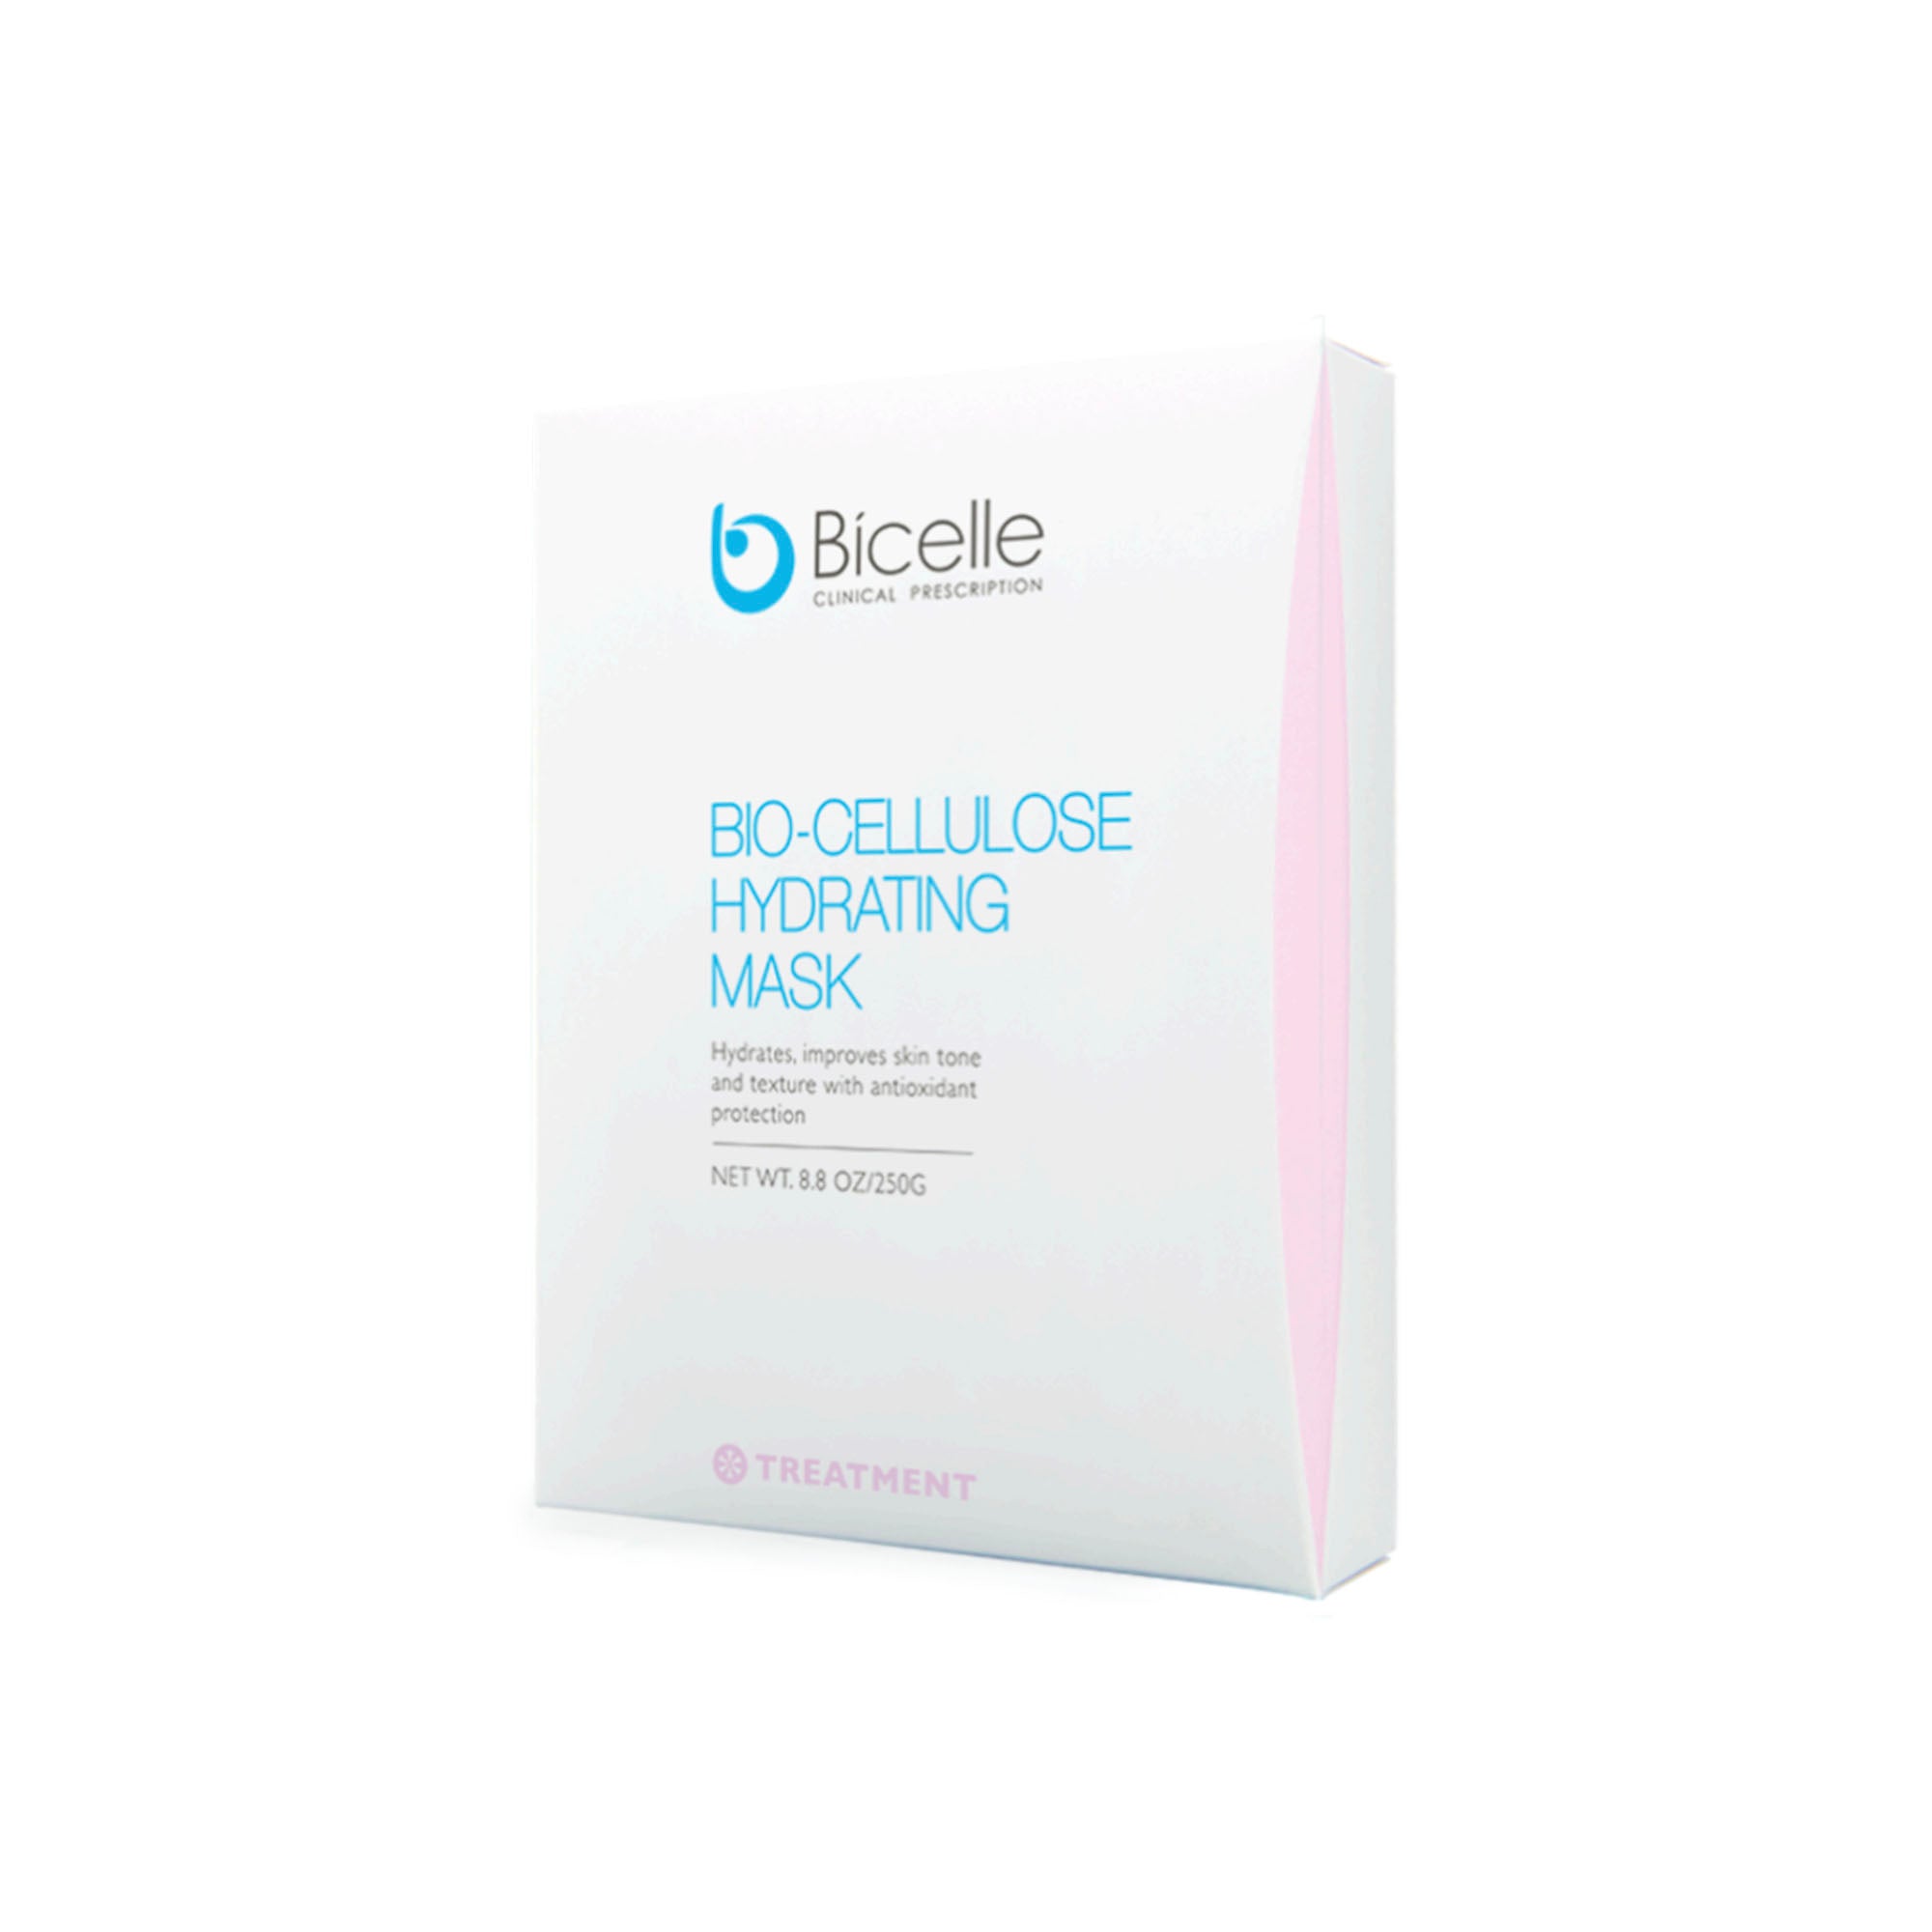 Bicelle Antioxidant Moisturizing Bio-Cellulose Hydrating Mask 5pcs｜Bicelle Bio-Cellulose Hydrating Mask 5pcs